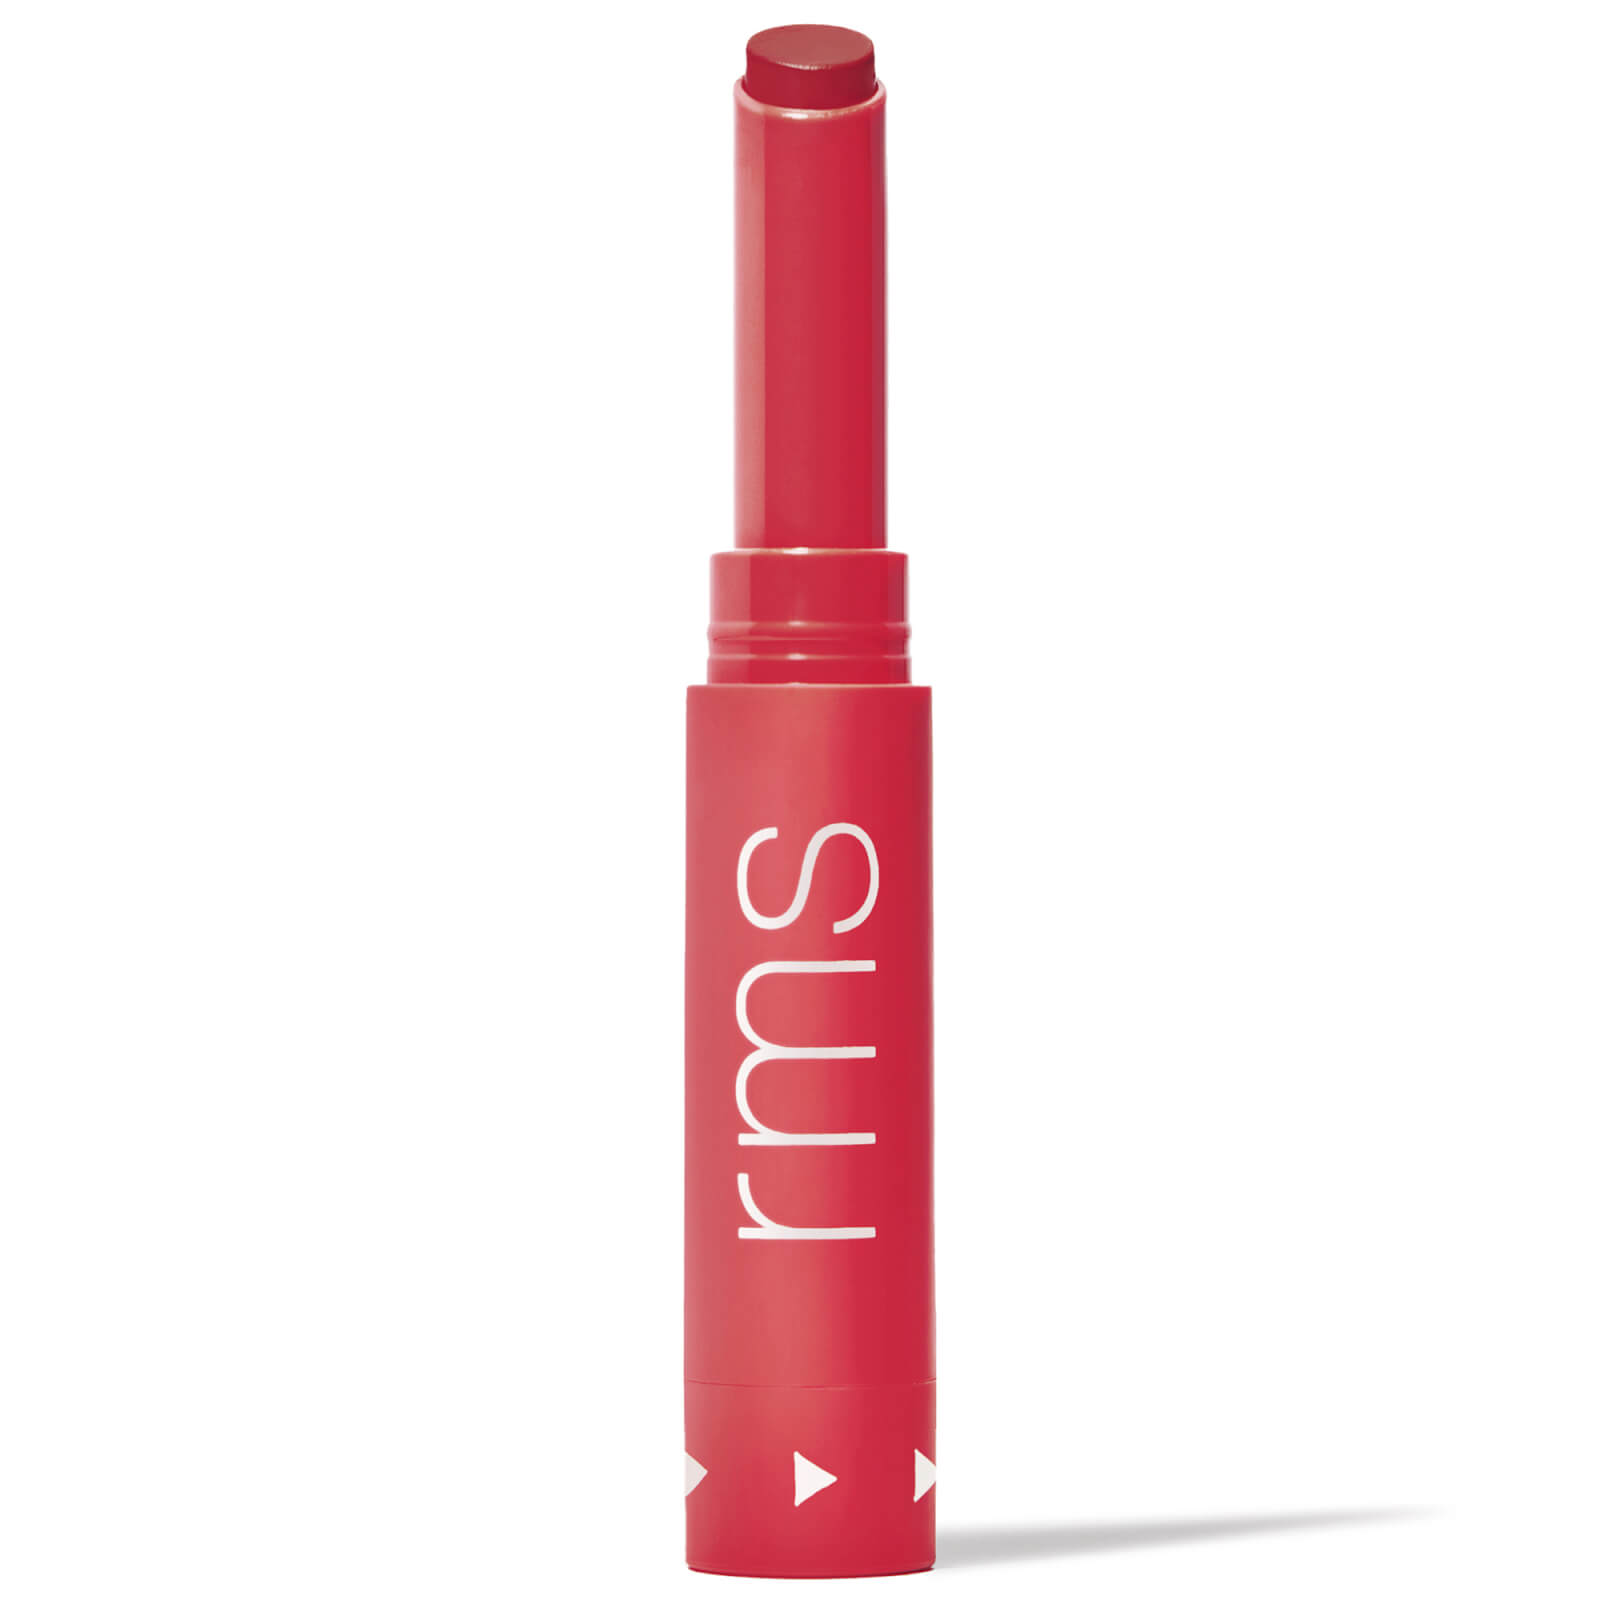 Rms Beauty Legendary Serum Lipstick 21g (various Shades) - Moondust In Pink